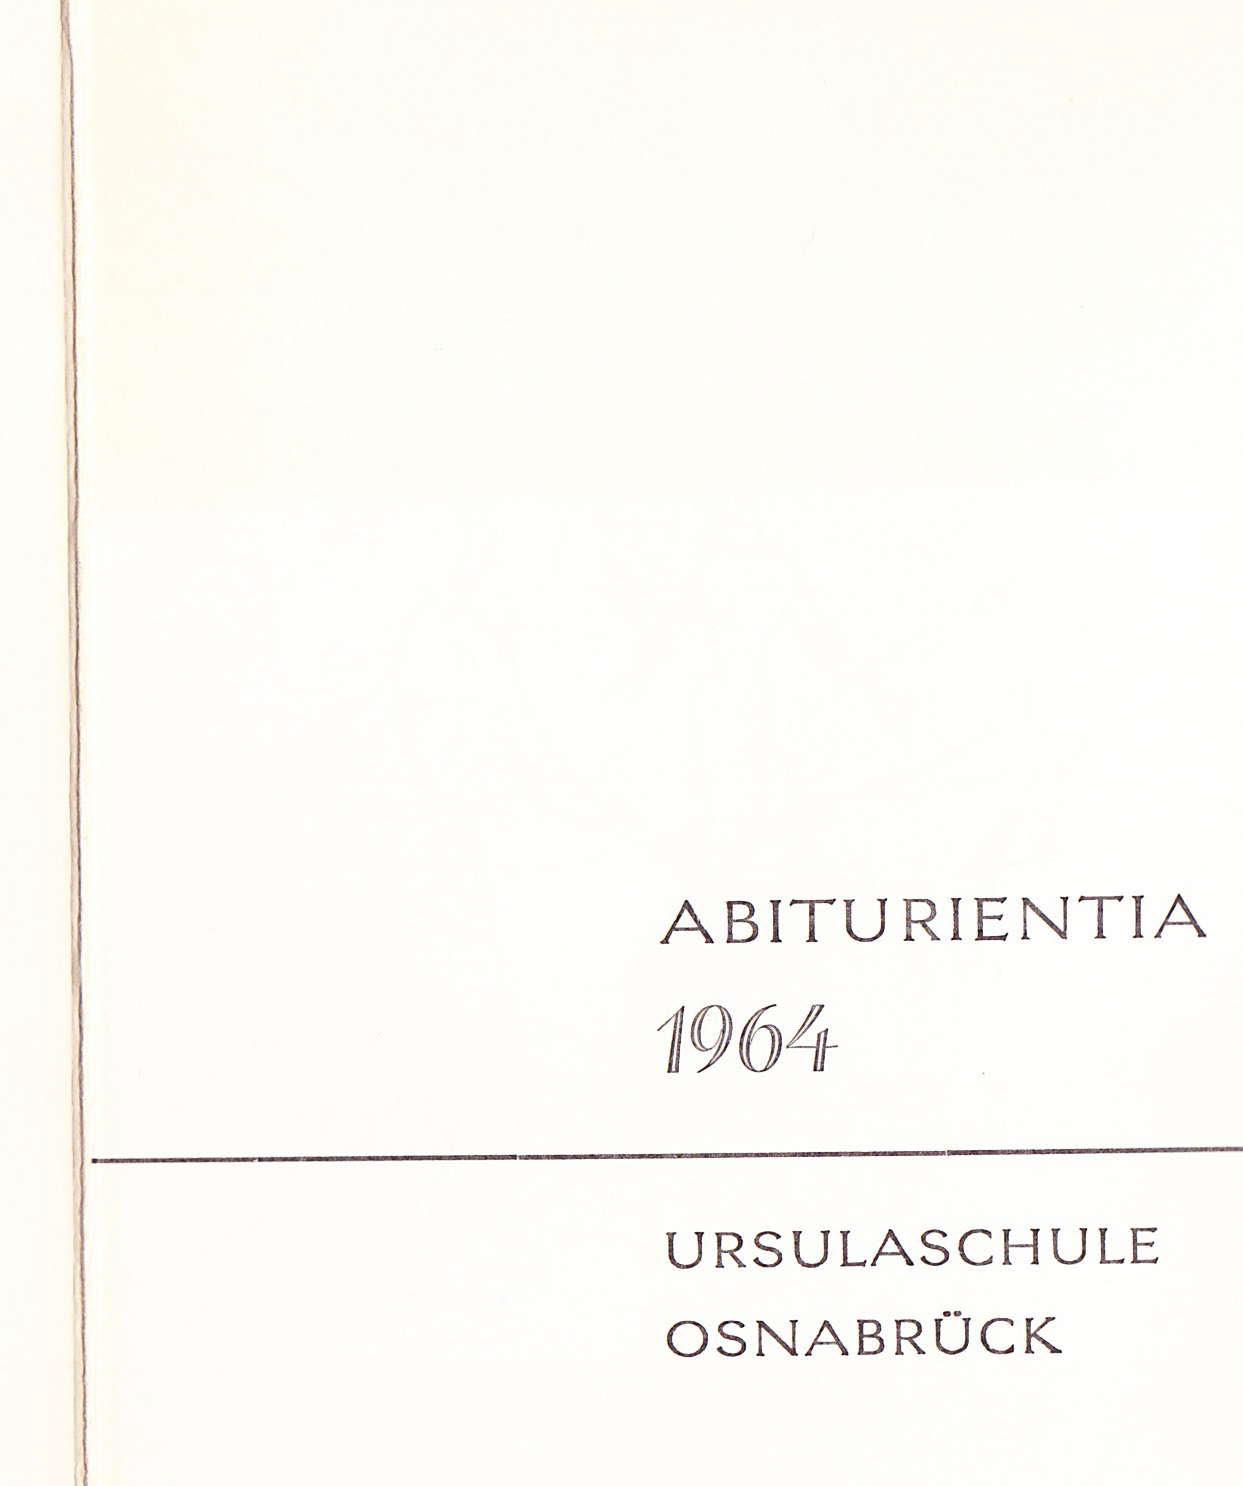 Abitur_1964_Tochter_Sabine_Ursulaschule_OS_Seite_2